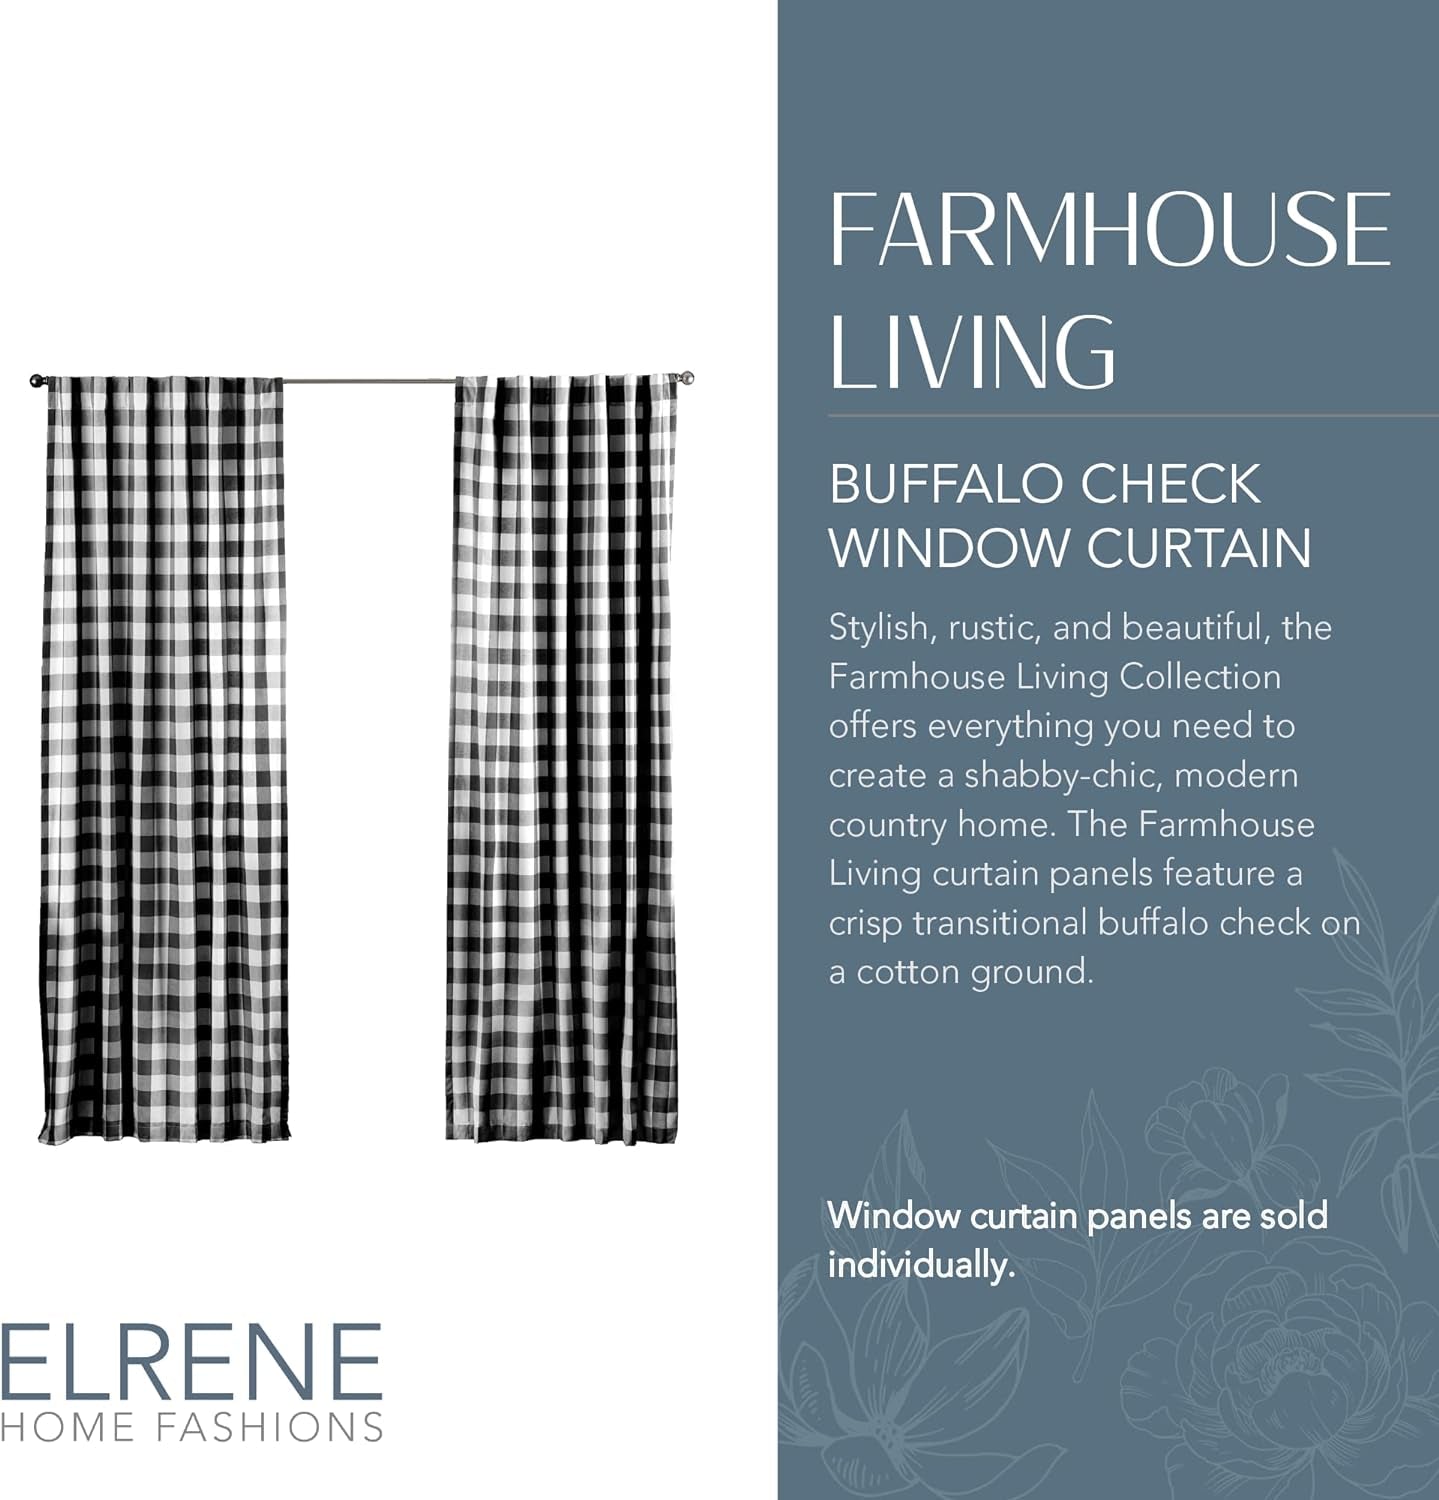 Elrene Home Fashions Farmhouse Living Buffalo-Check Window Curtain Panel, (Black), (52X95)  Elrene Home Fashions   